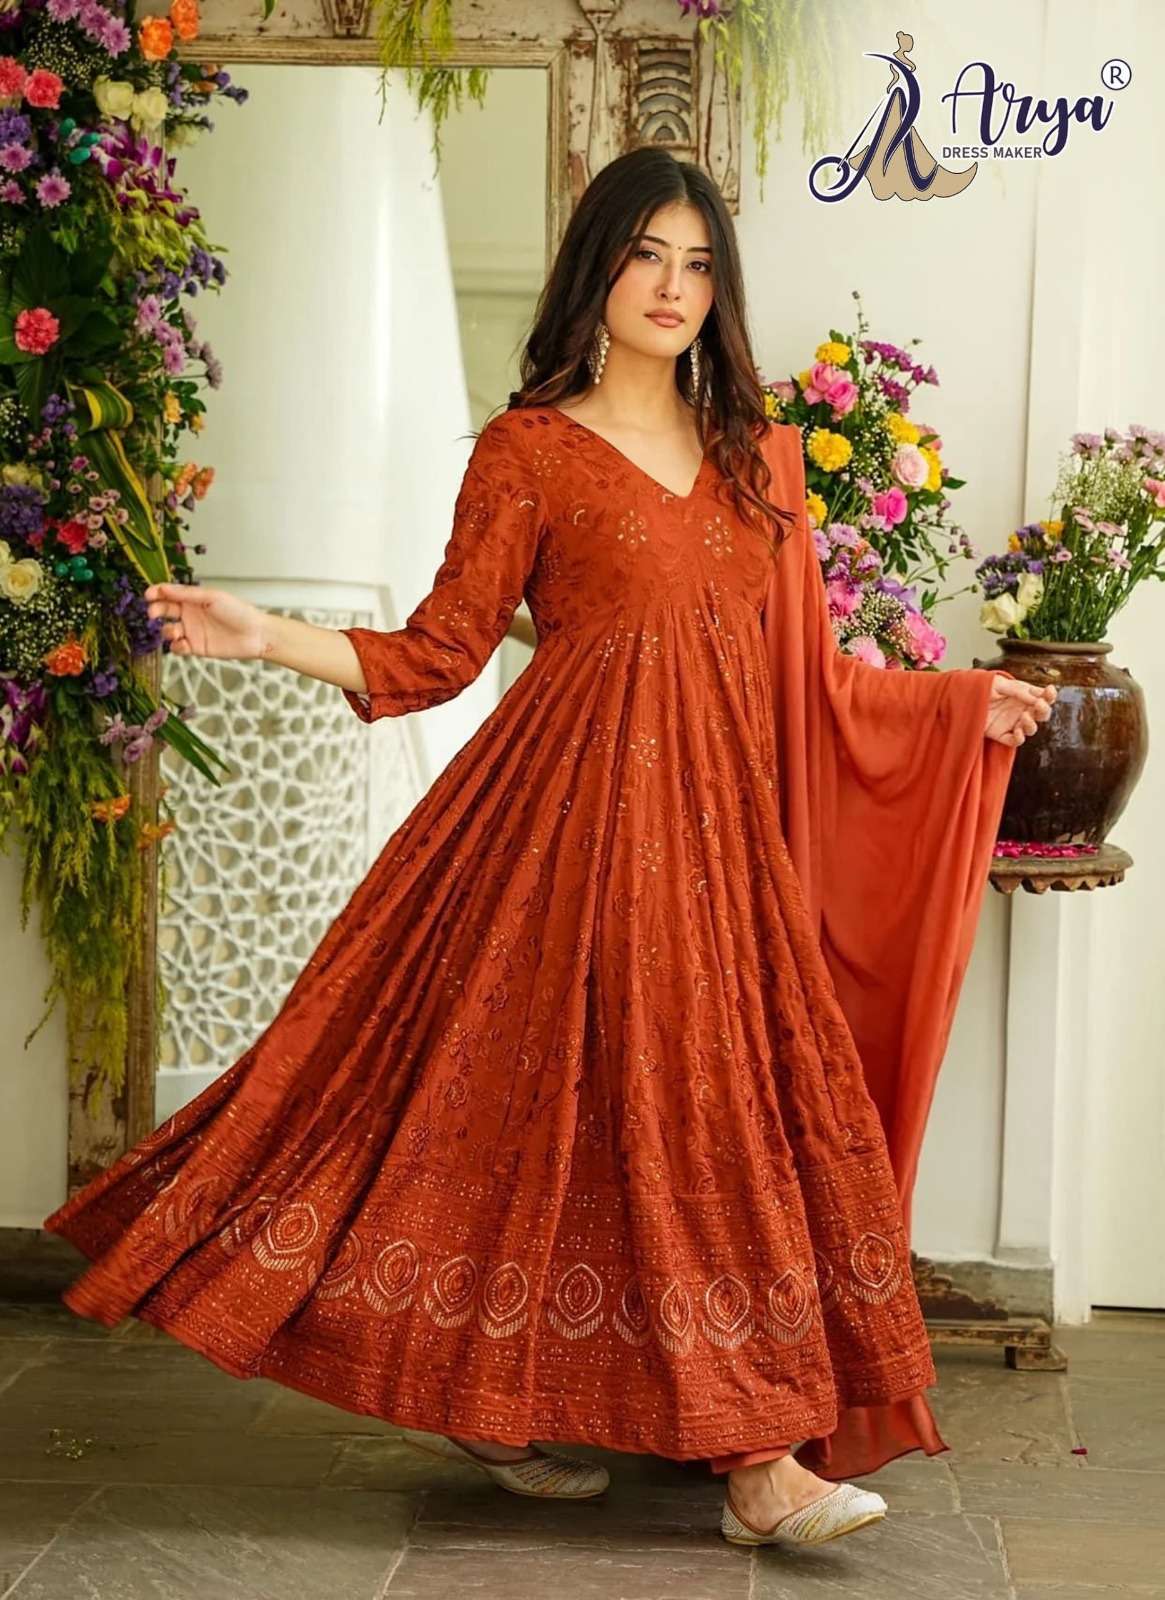 SANARI BY ARYA DRESS MAKER 3001 TO 3006 SERIES BEAUTIFUL STYLISH FANCY  COLORFUL CASUAL WEAR &